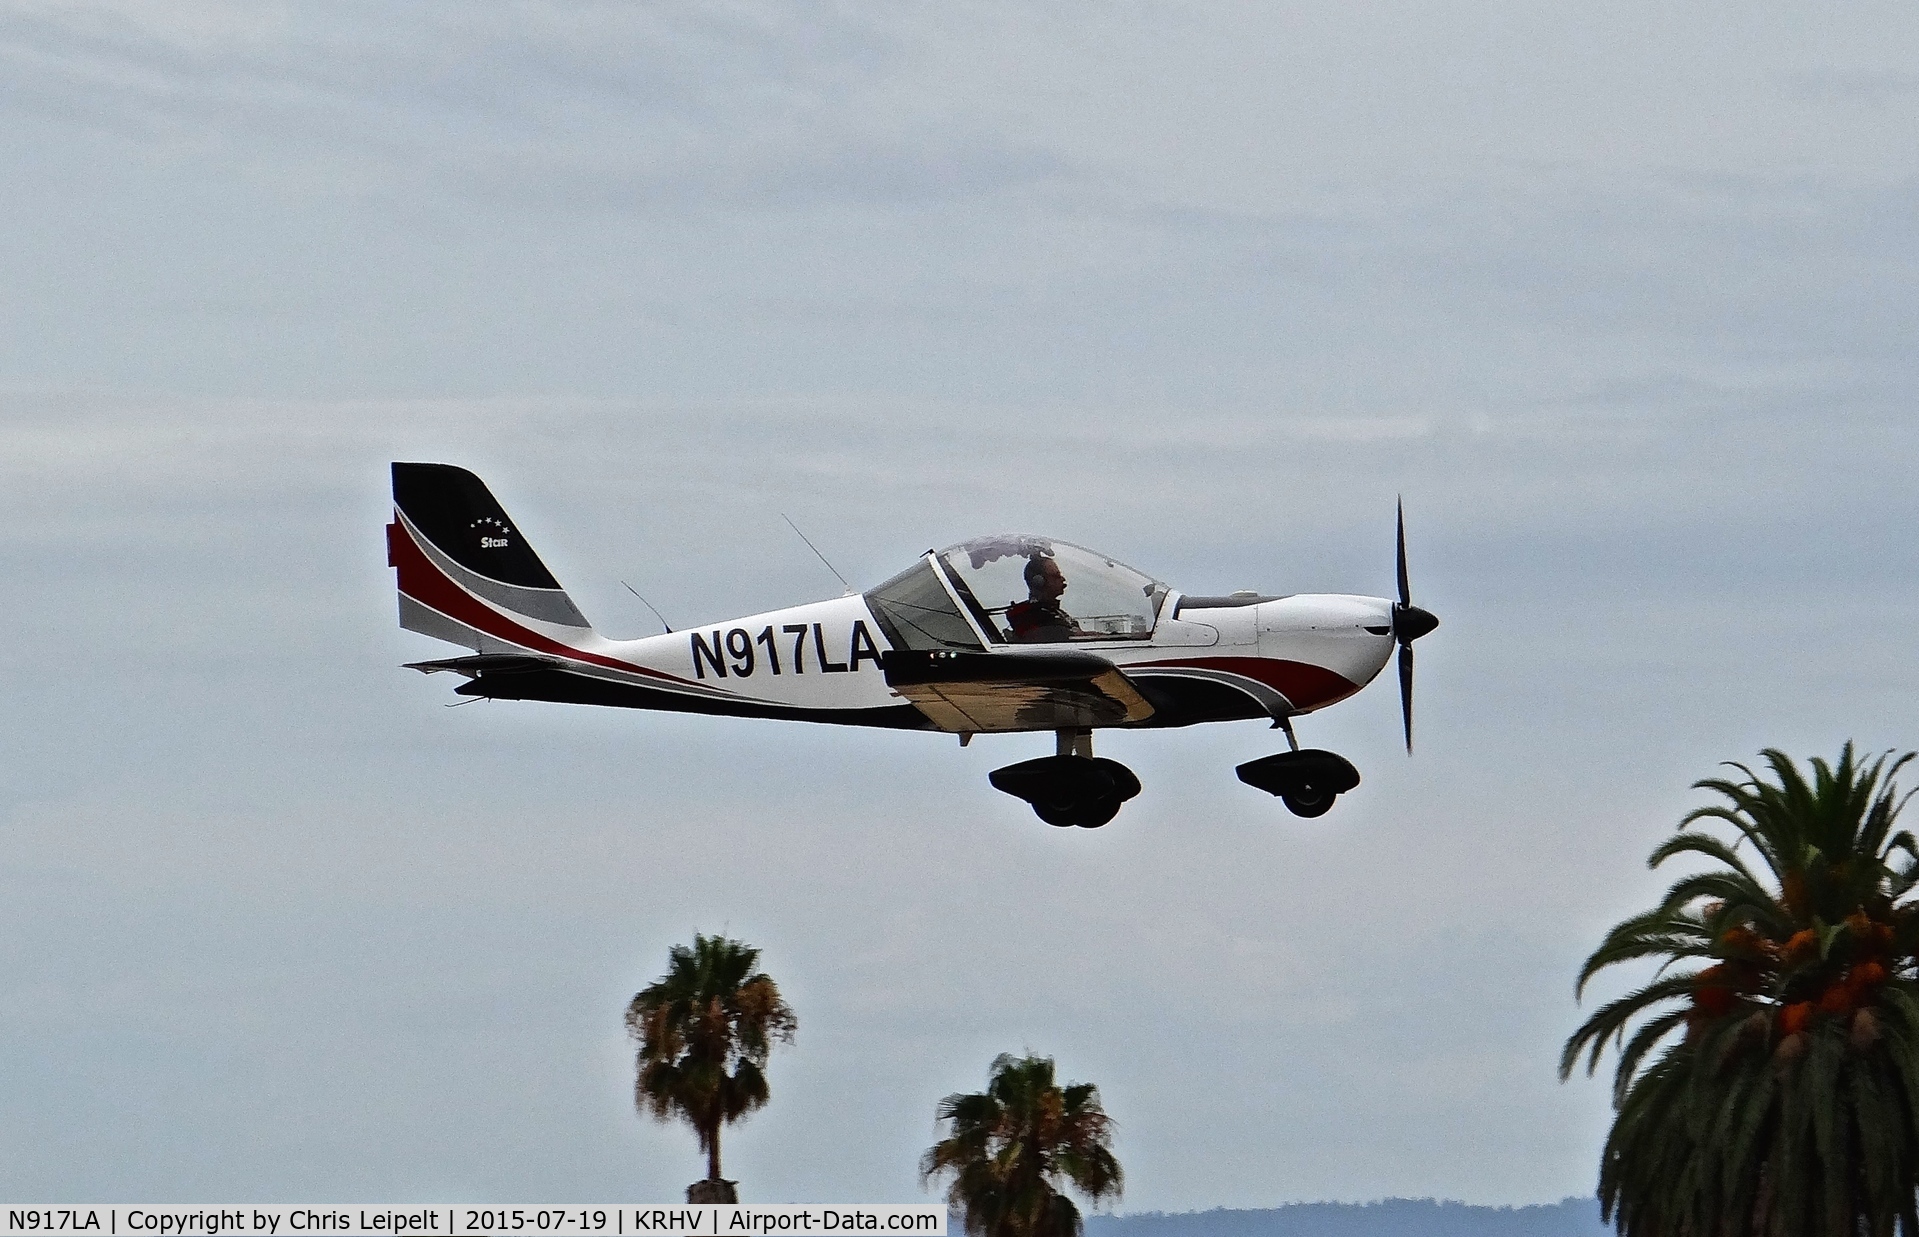 N917LA, 2007 Evektor-Aerotechnik Sportstar Plus C/N 20070917, California-based 2007 Sportstar Plus departing at Reid Hillview Airport, San Jose, CA.